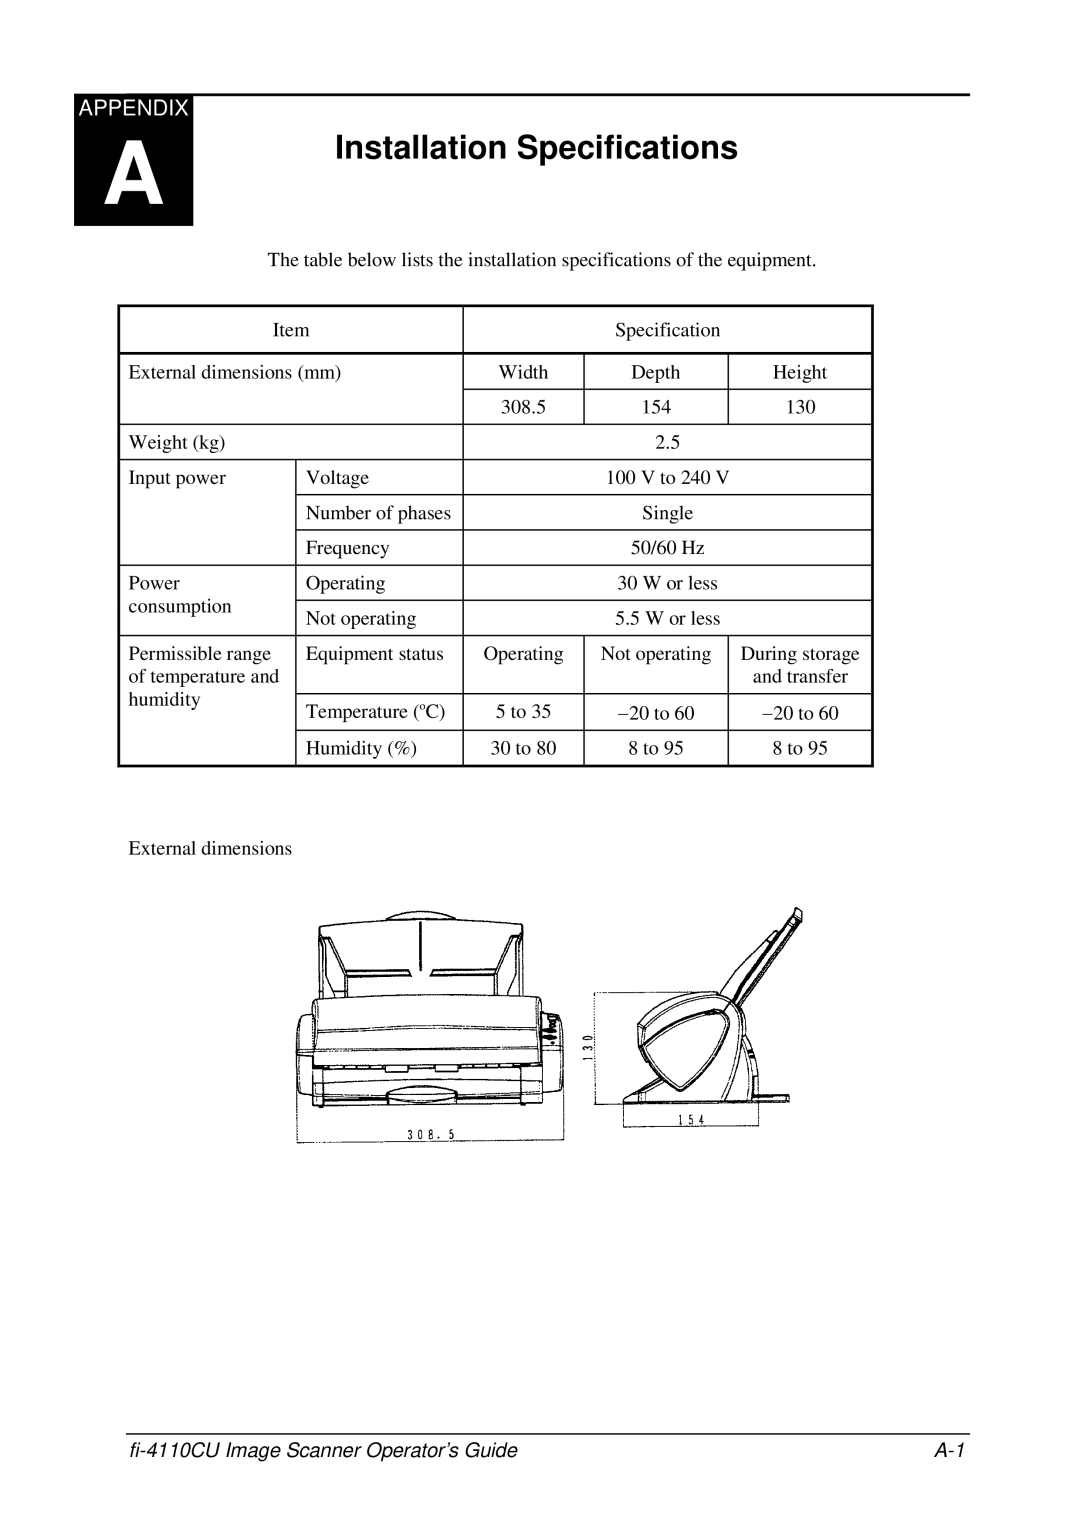 Fujitsu C150-E194-01EN manual Installation Specifications, Appendix, fi-4110CU Image Scanner Operator’s Guide 